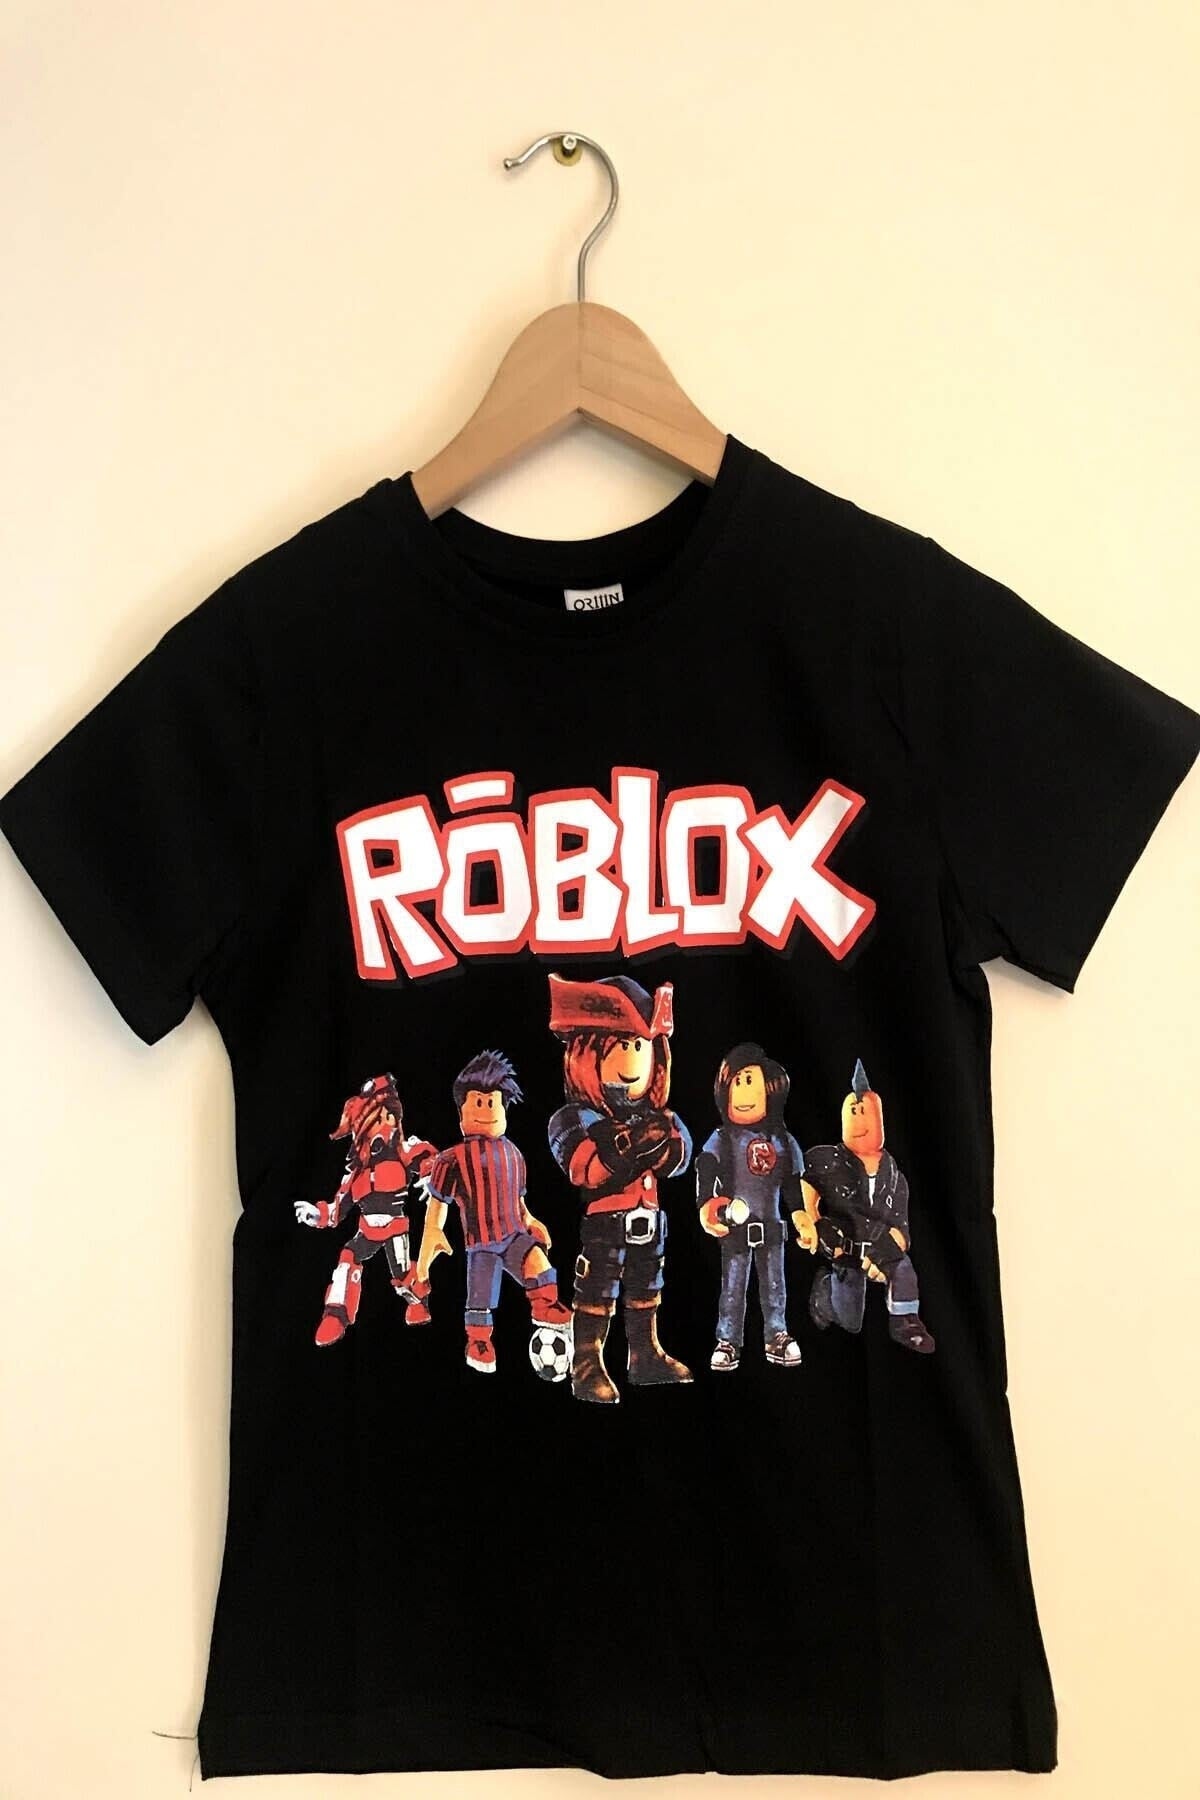 Roblox Kid's T Shirt 100% Cotton -  Sweden